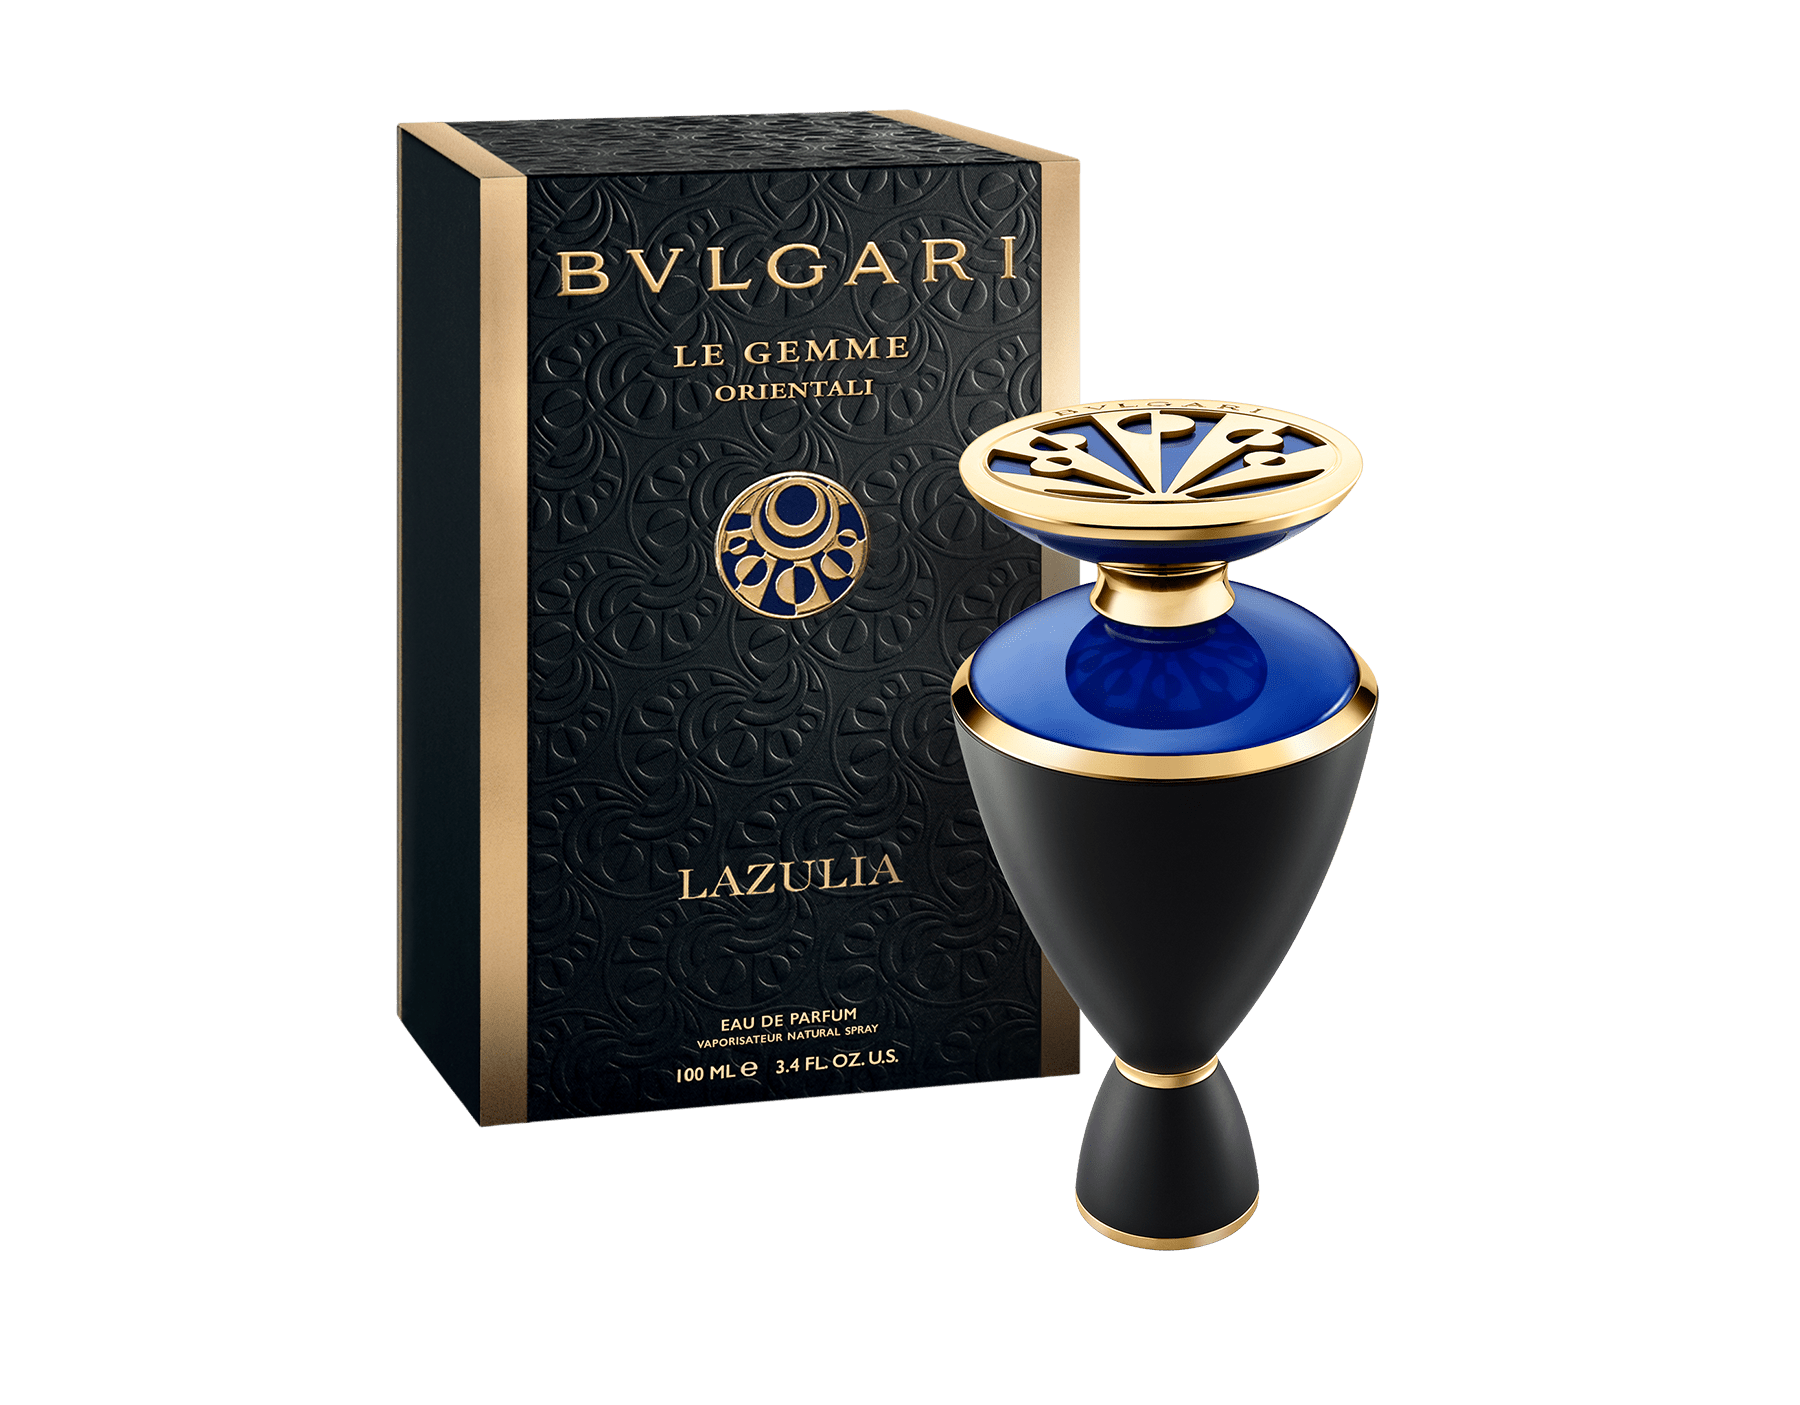 Sale > bvlgari watches 2021 > in stock